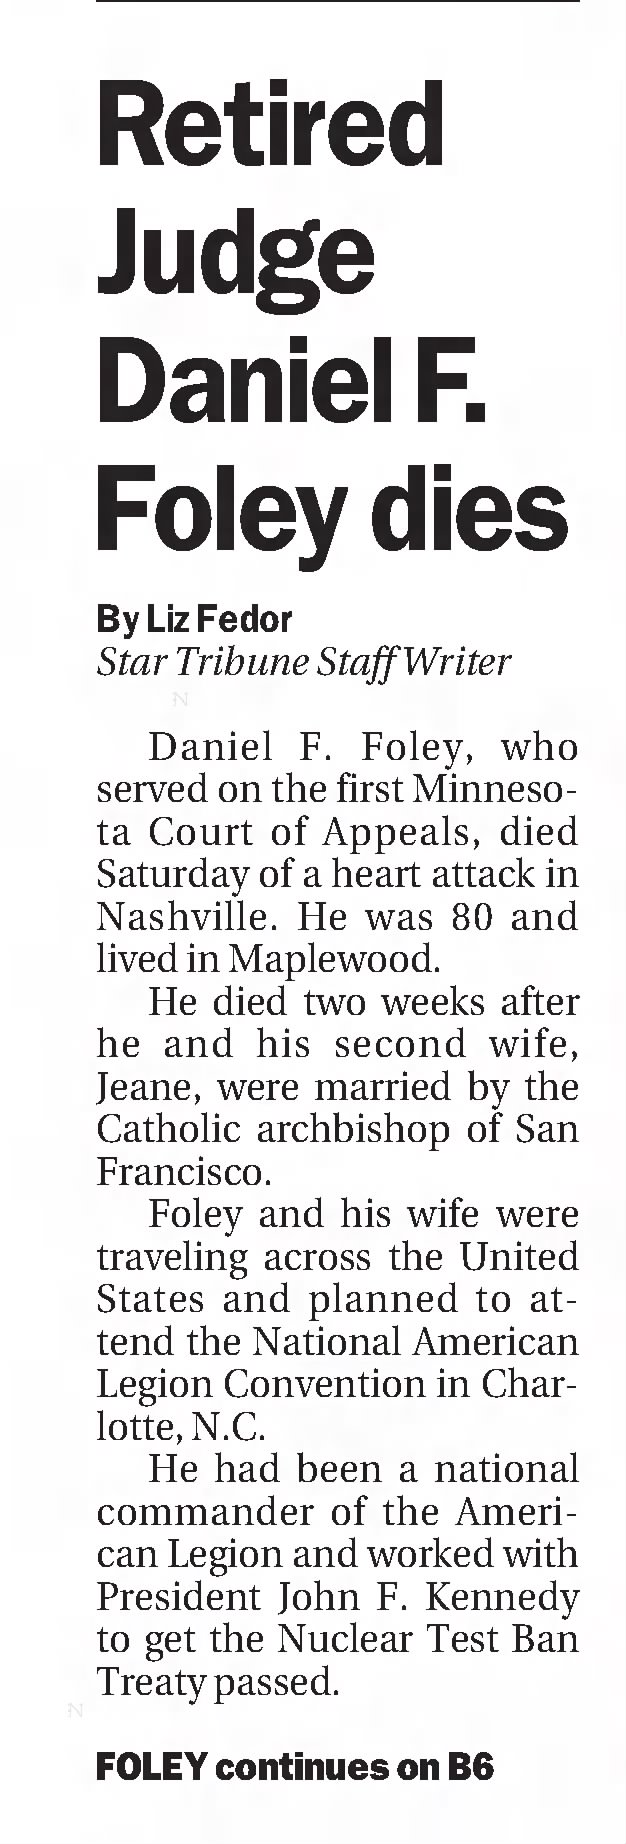 Judge Foley Dies 2002 p.1B